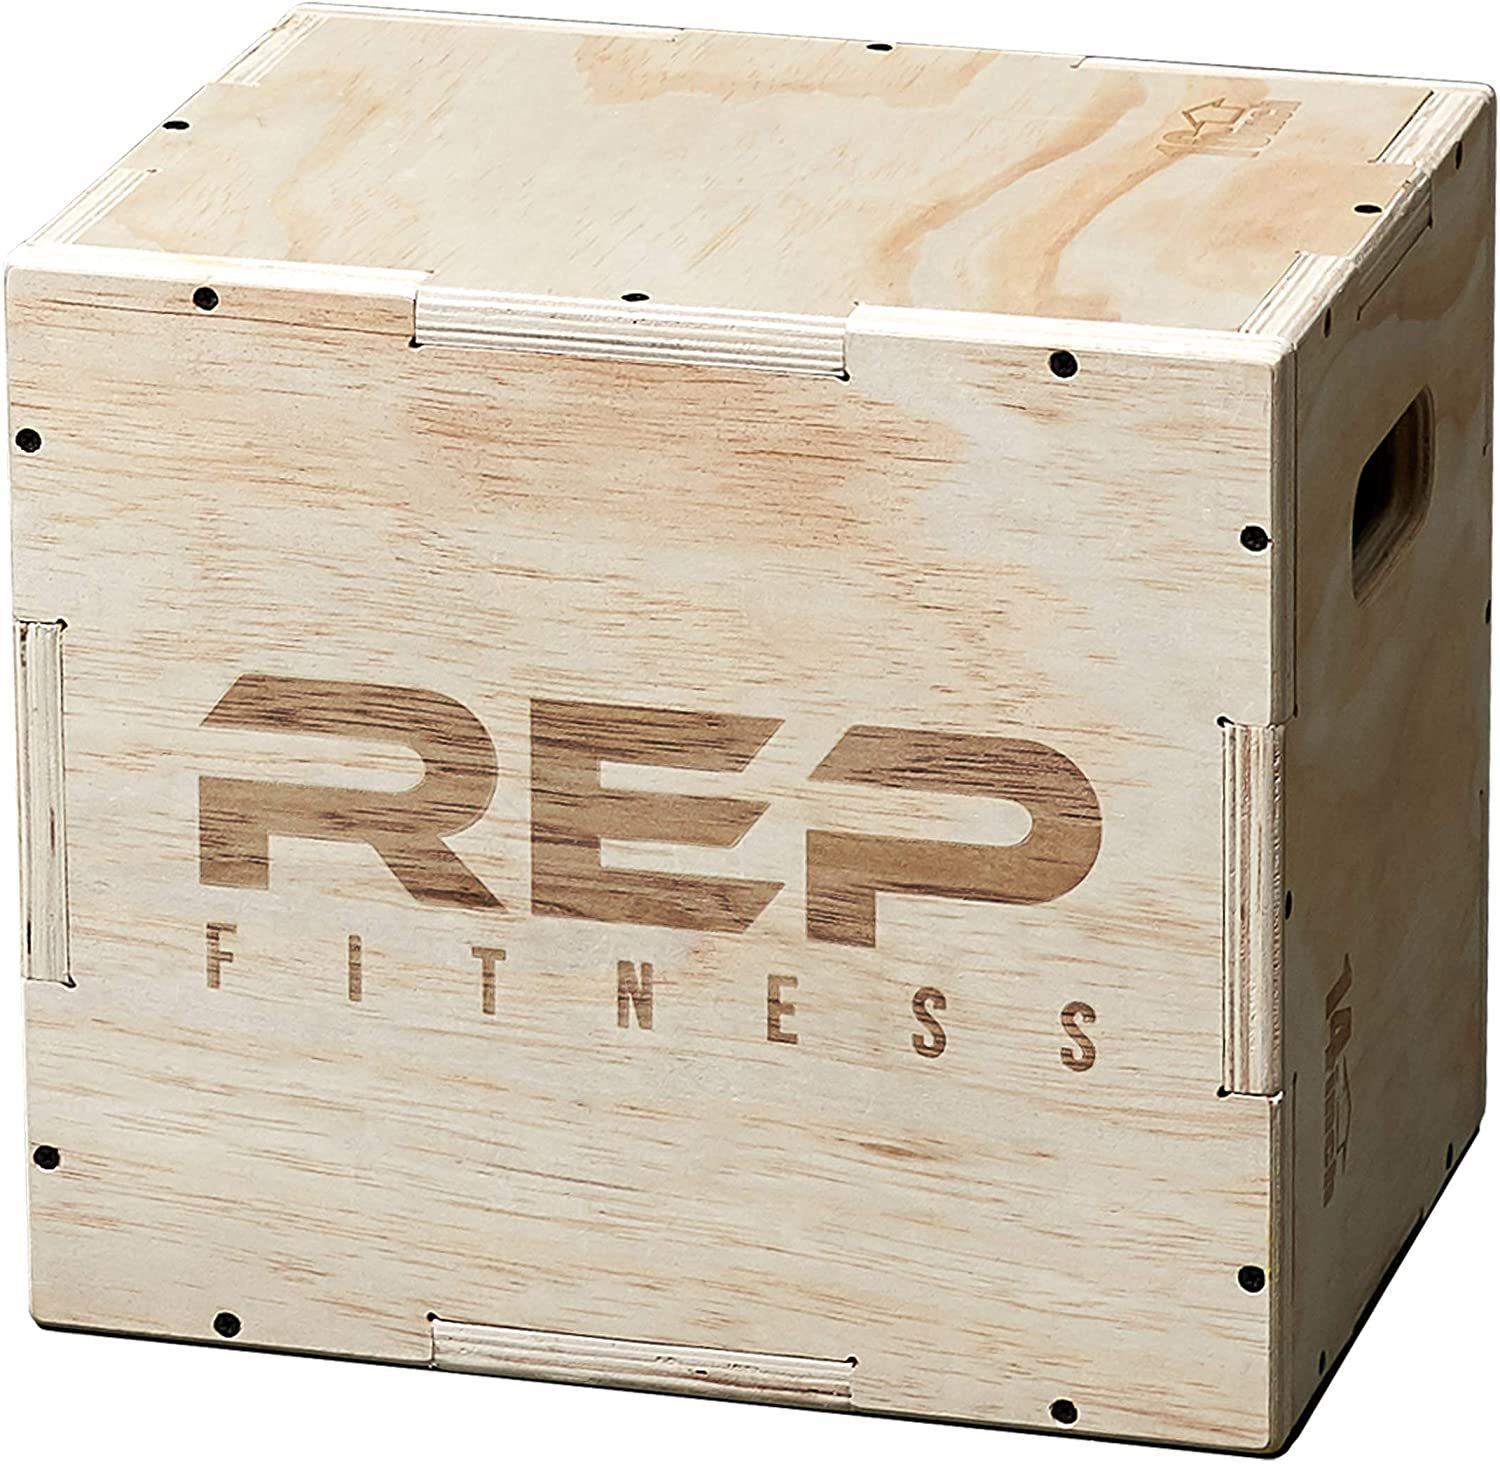 REP FITNESS Unassembled 3 in 1 Wood Plyometric Box